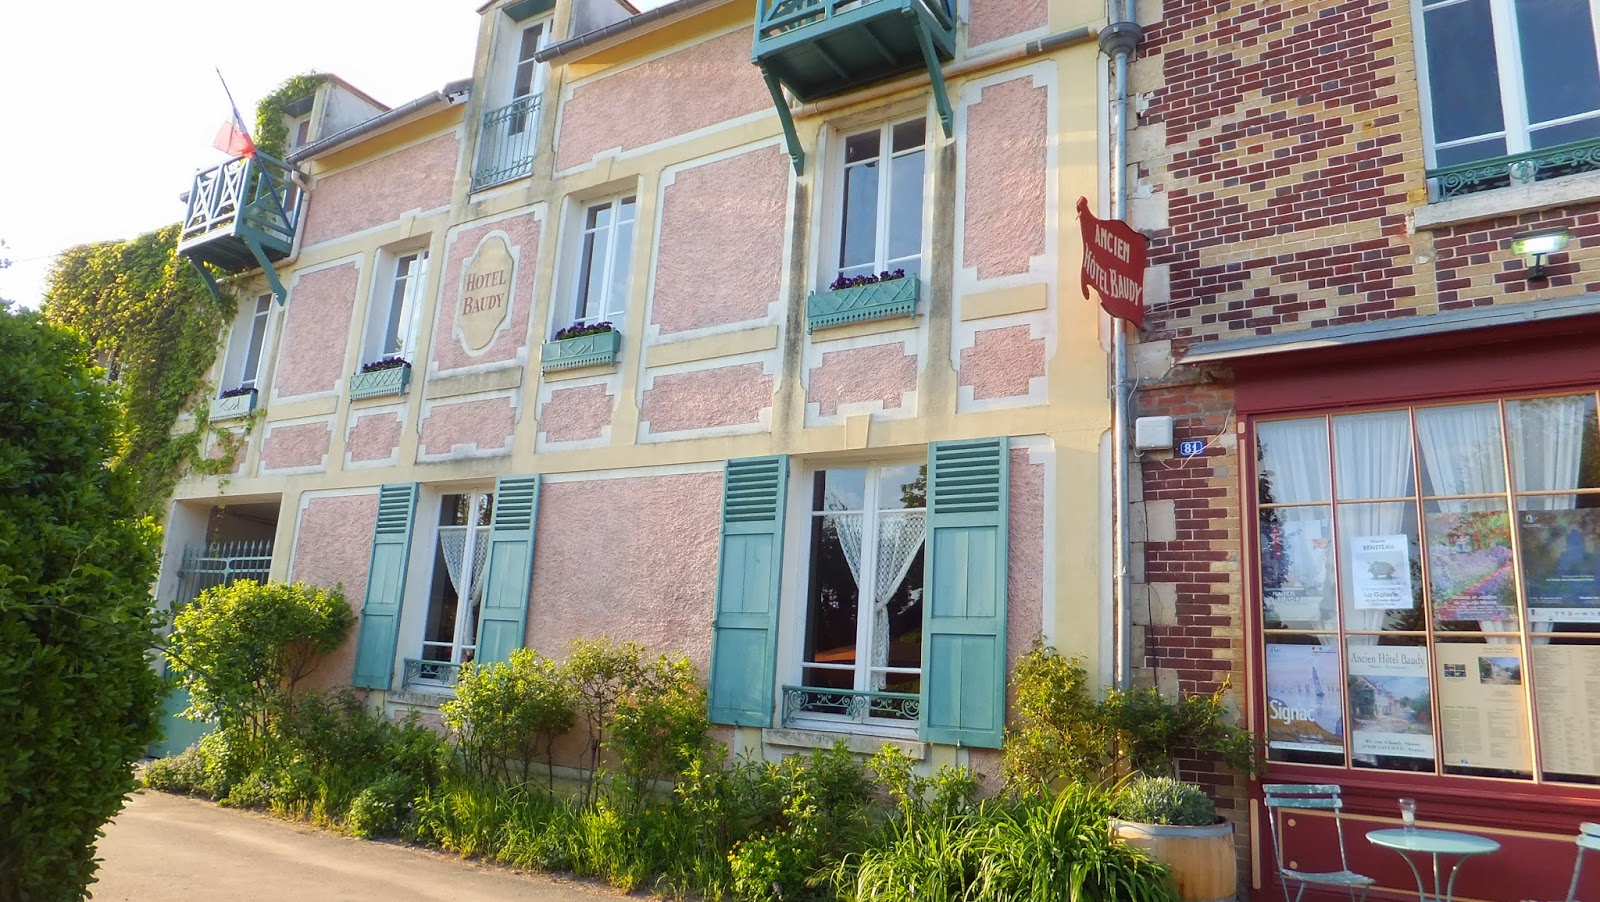 Ancien Hotel Baudy, Giverny, Monet, Francia, Elisa N, Blog de Viajes, Lifestyle, Travel